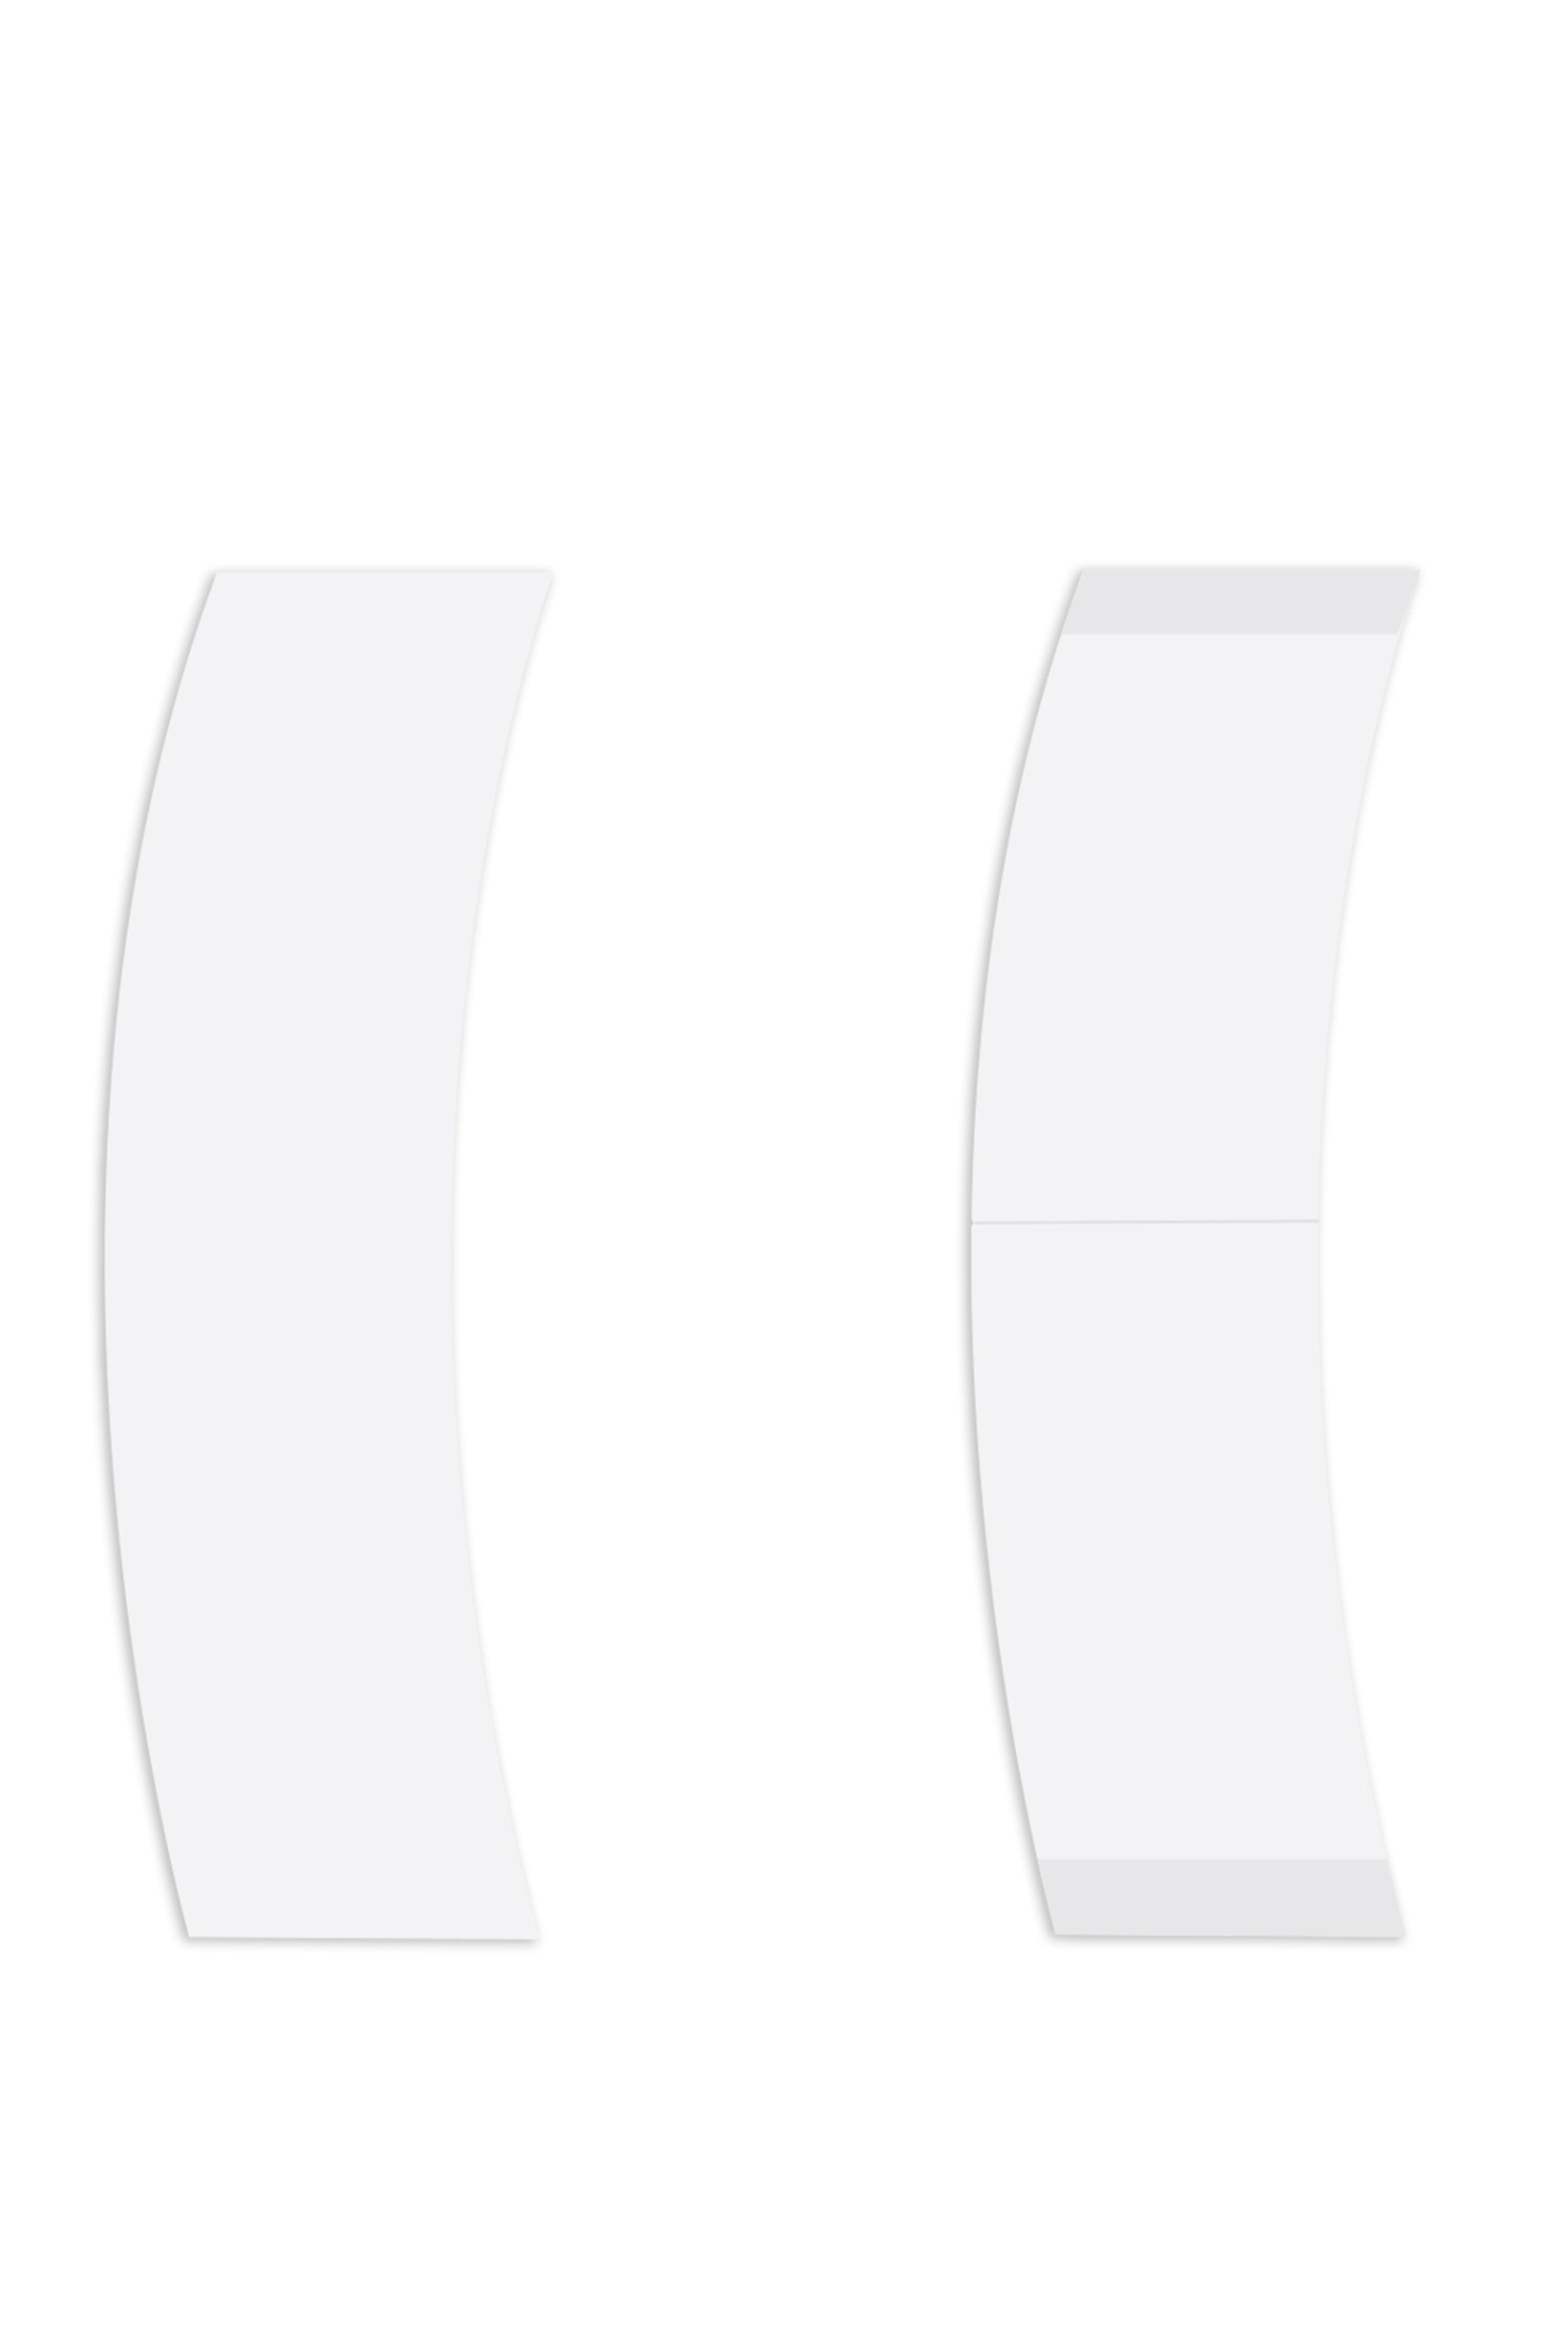 Walker Tape White Tape Beyaz Bant Protez Saç Bandı C 2cm X 7,5cm36 Adet ADVANCED EASY OF LACE